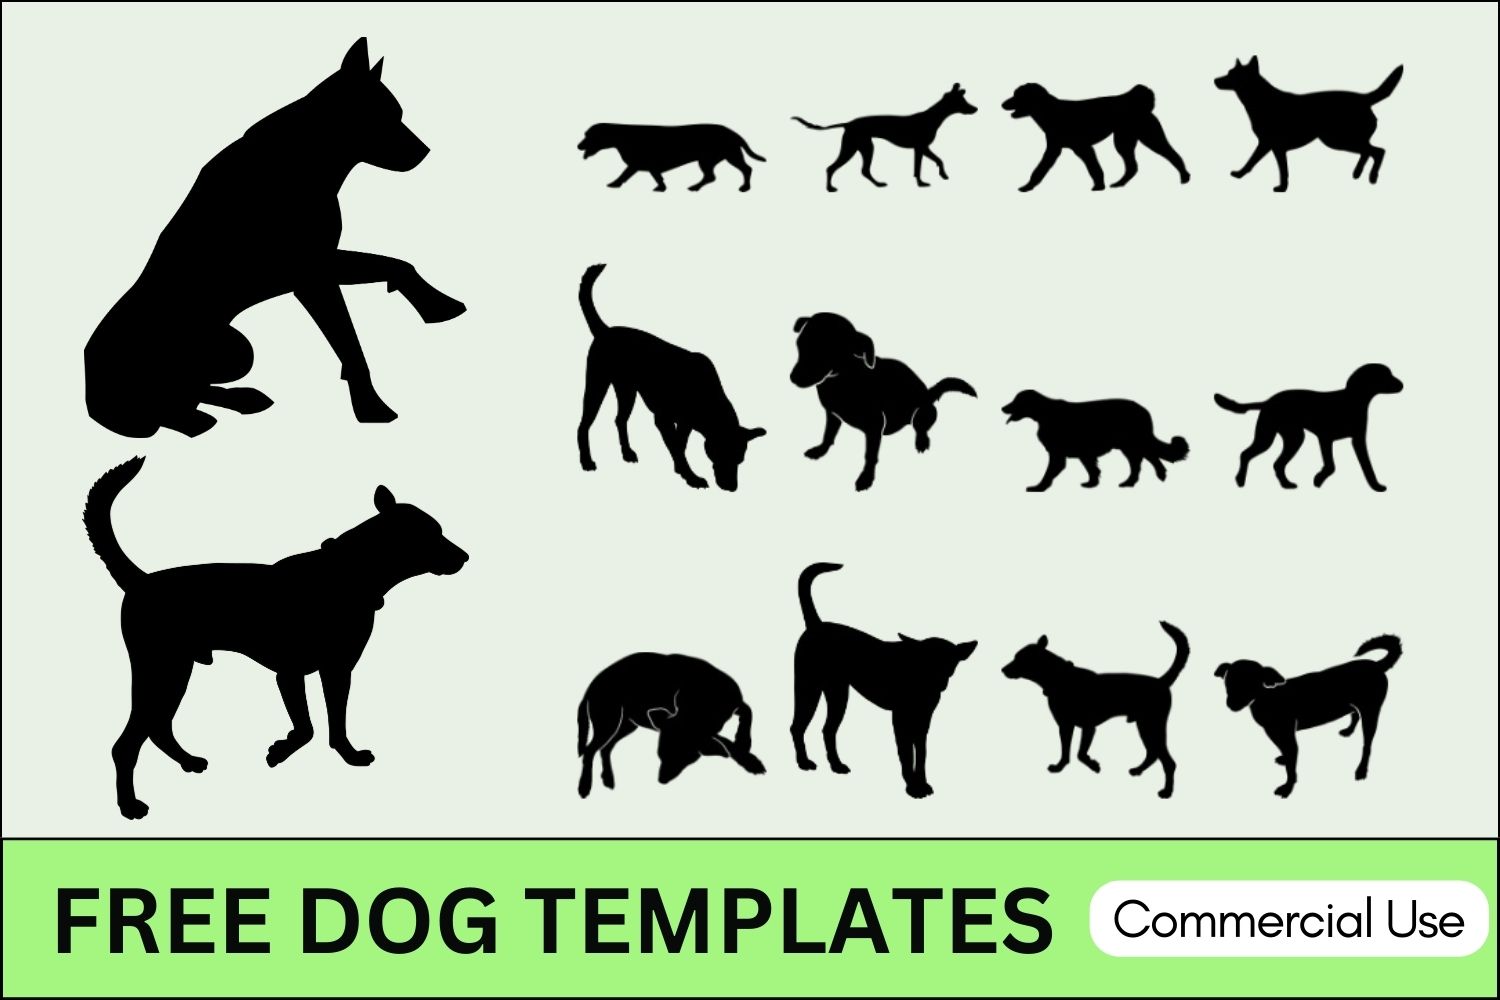 Dog templates, Dog silhouettes, Dog stencils, Dog SVG, Clipart, Cricut Cut file, Dog Clipart, Download, Dog breeds, Printable, Pet animals, Free